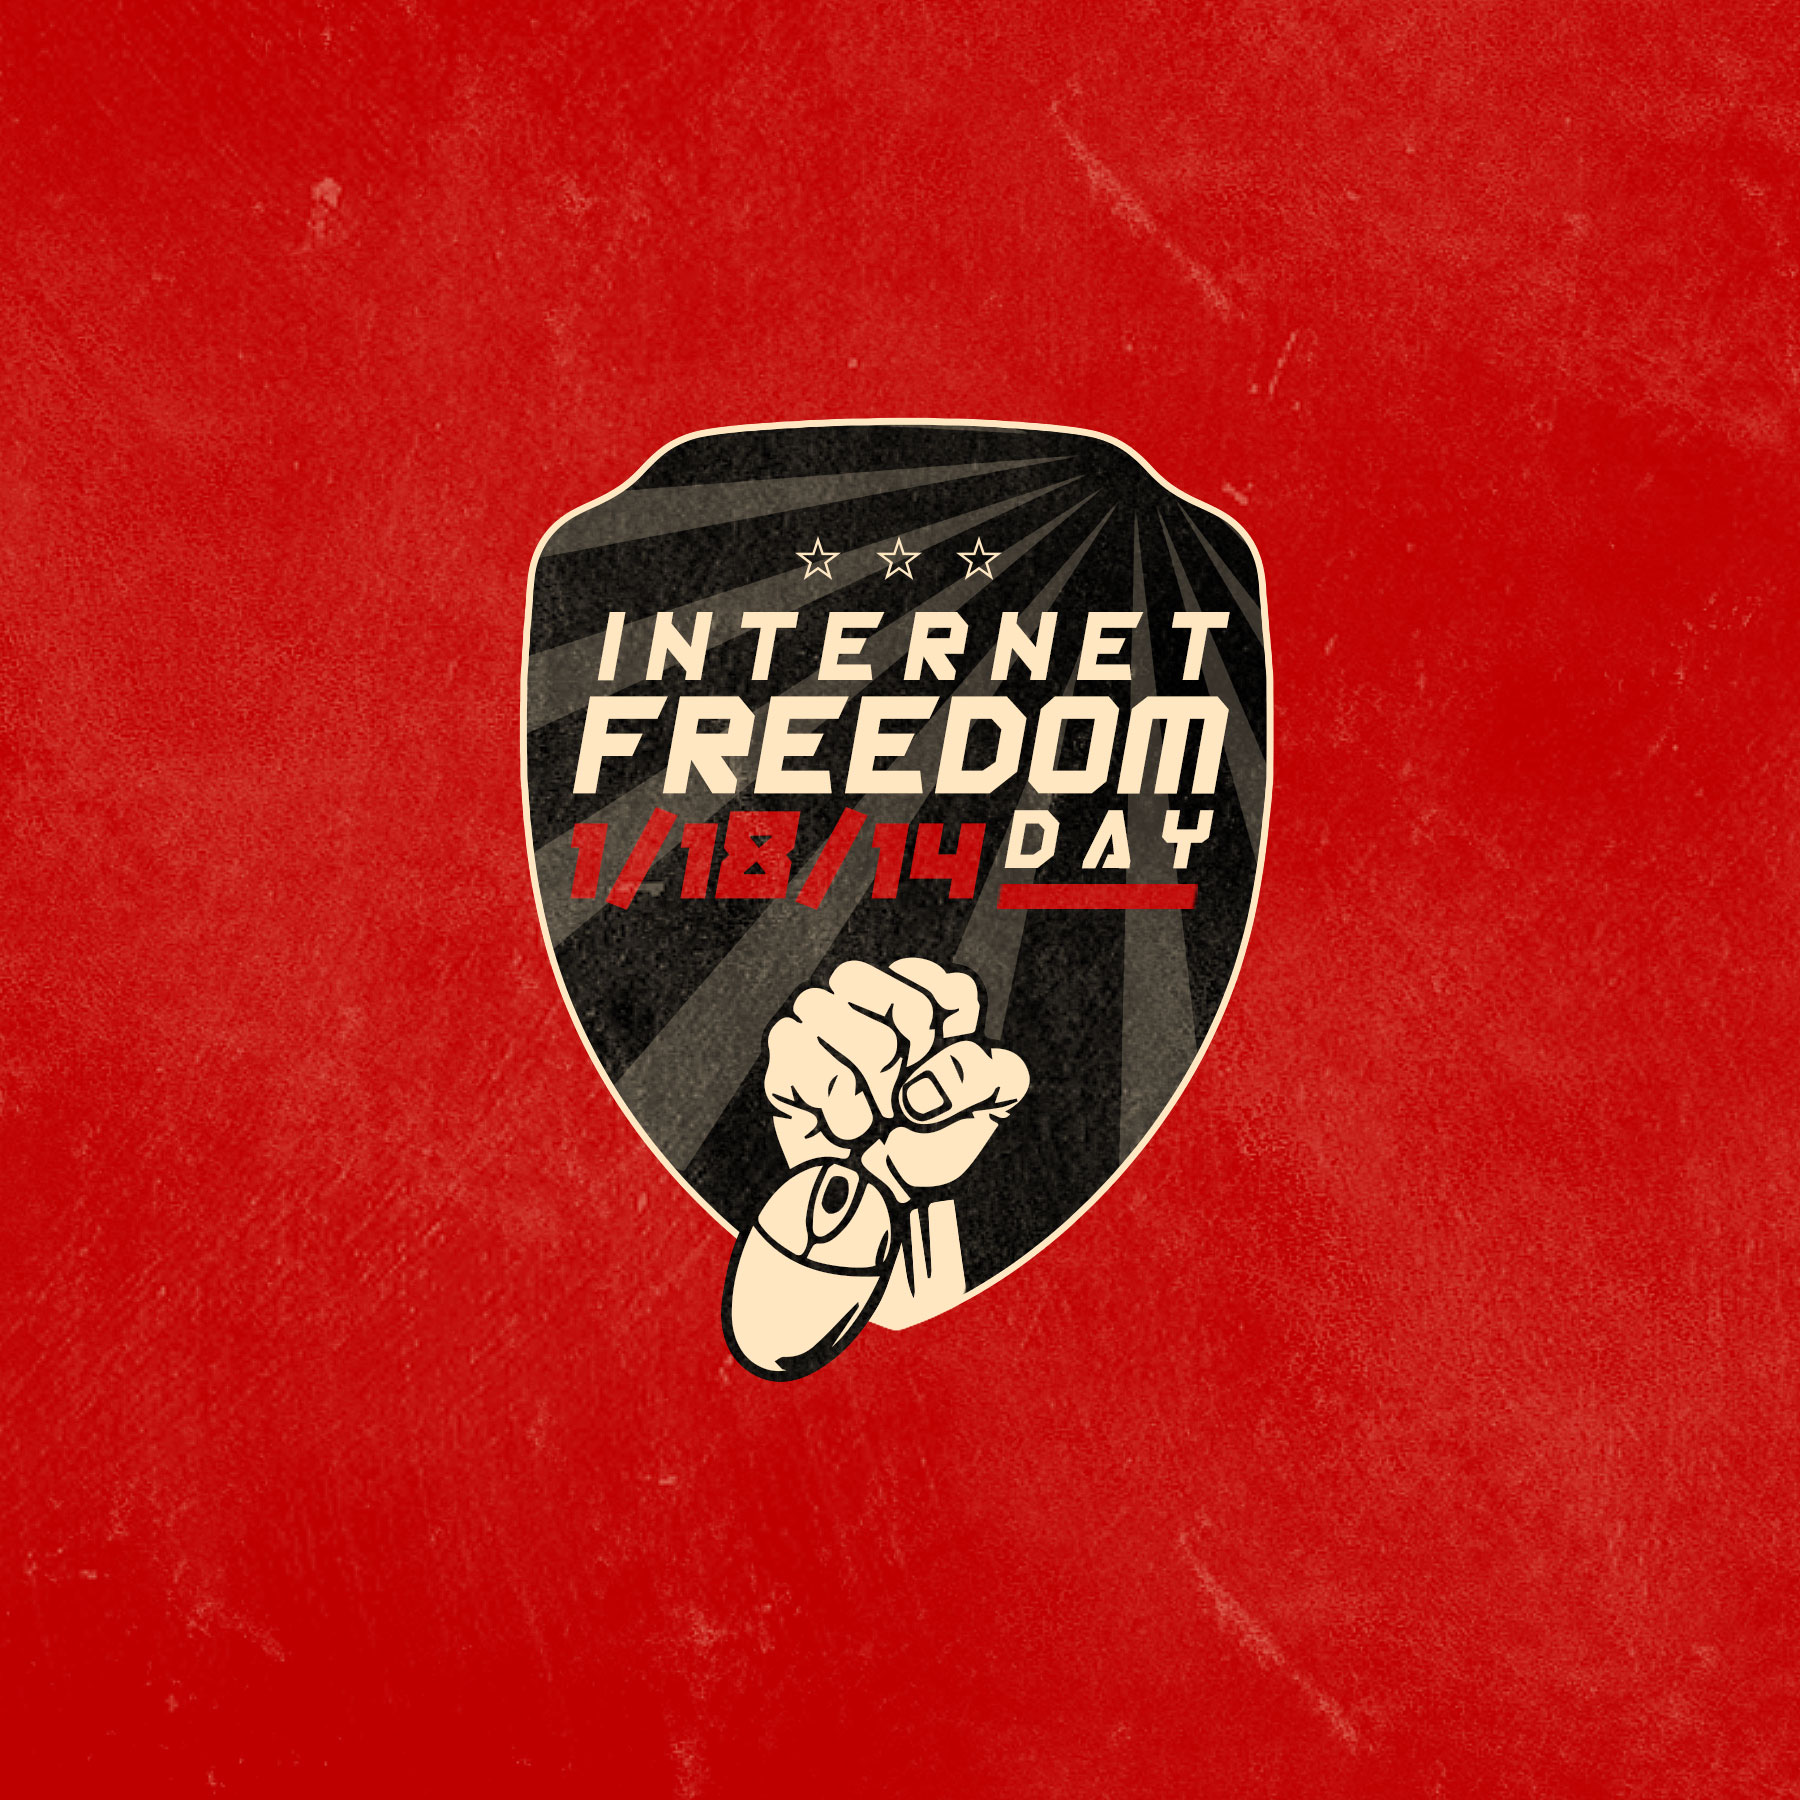 Internet Freedom Day logo